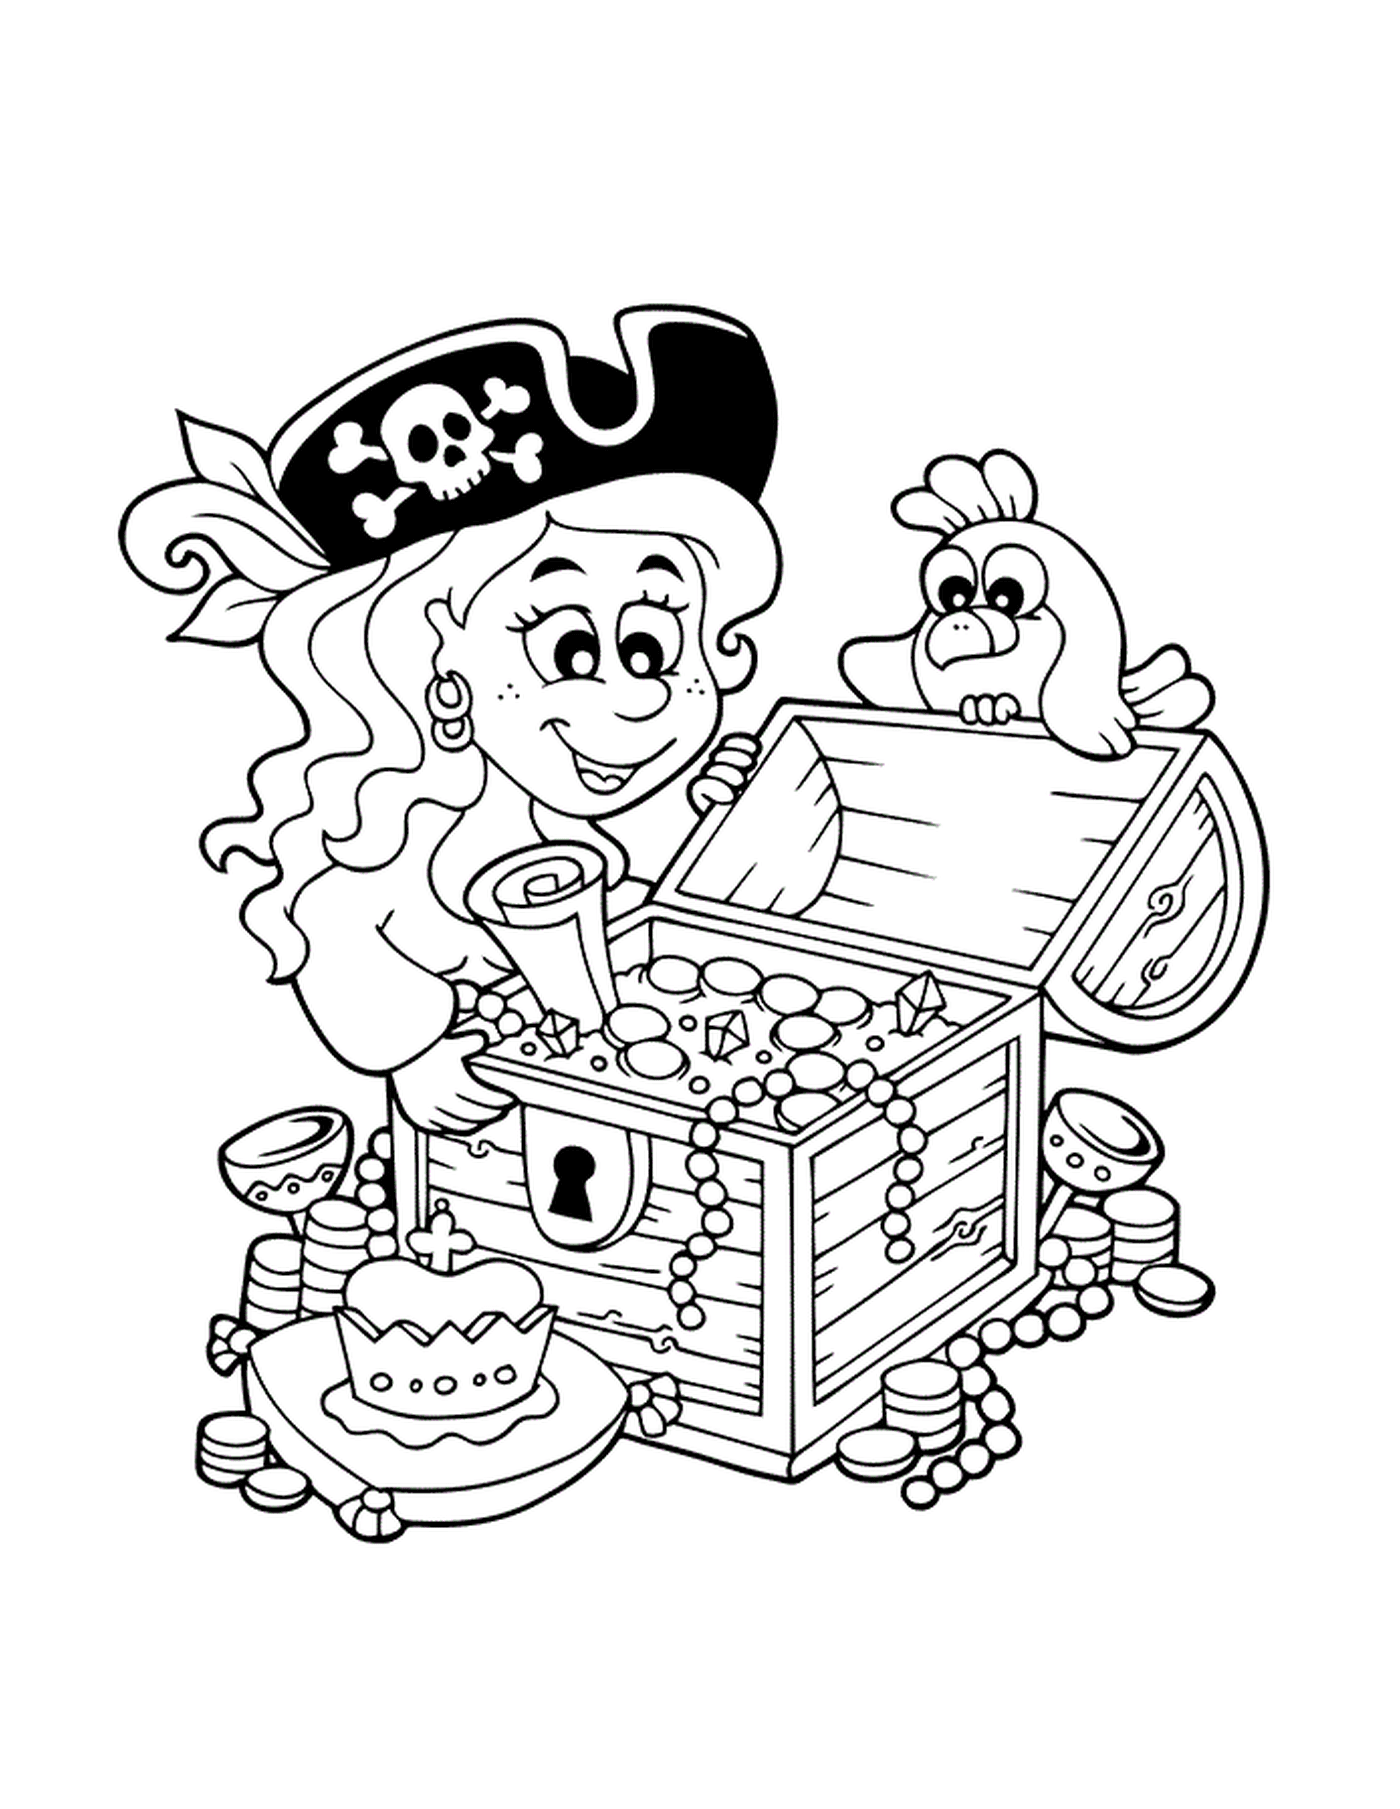  Pirate girl discovers treasure 